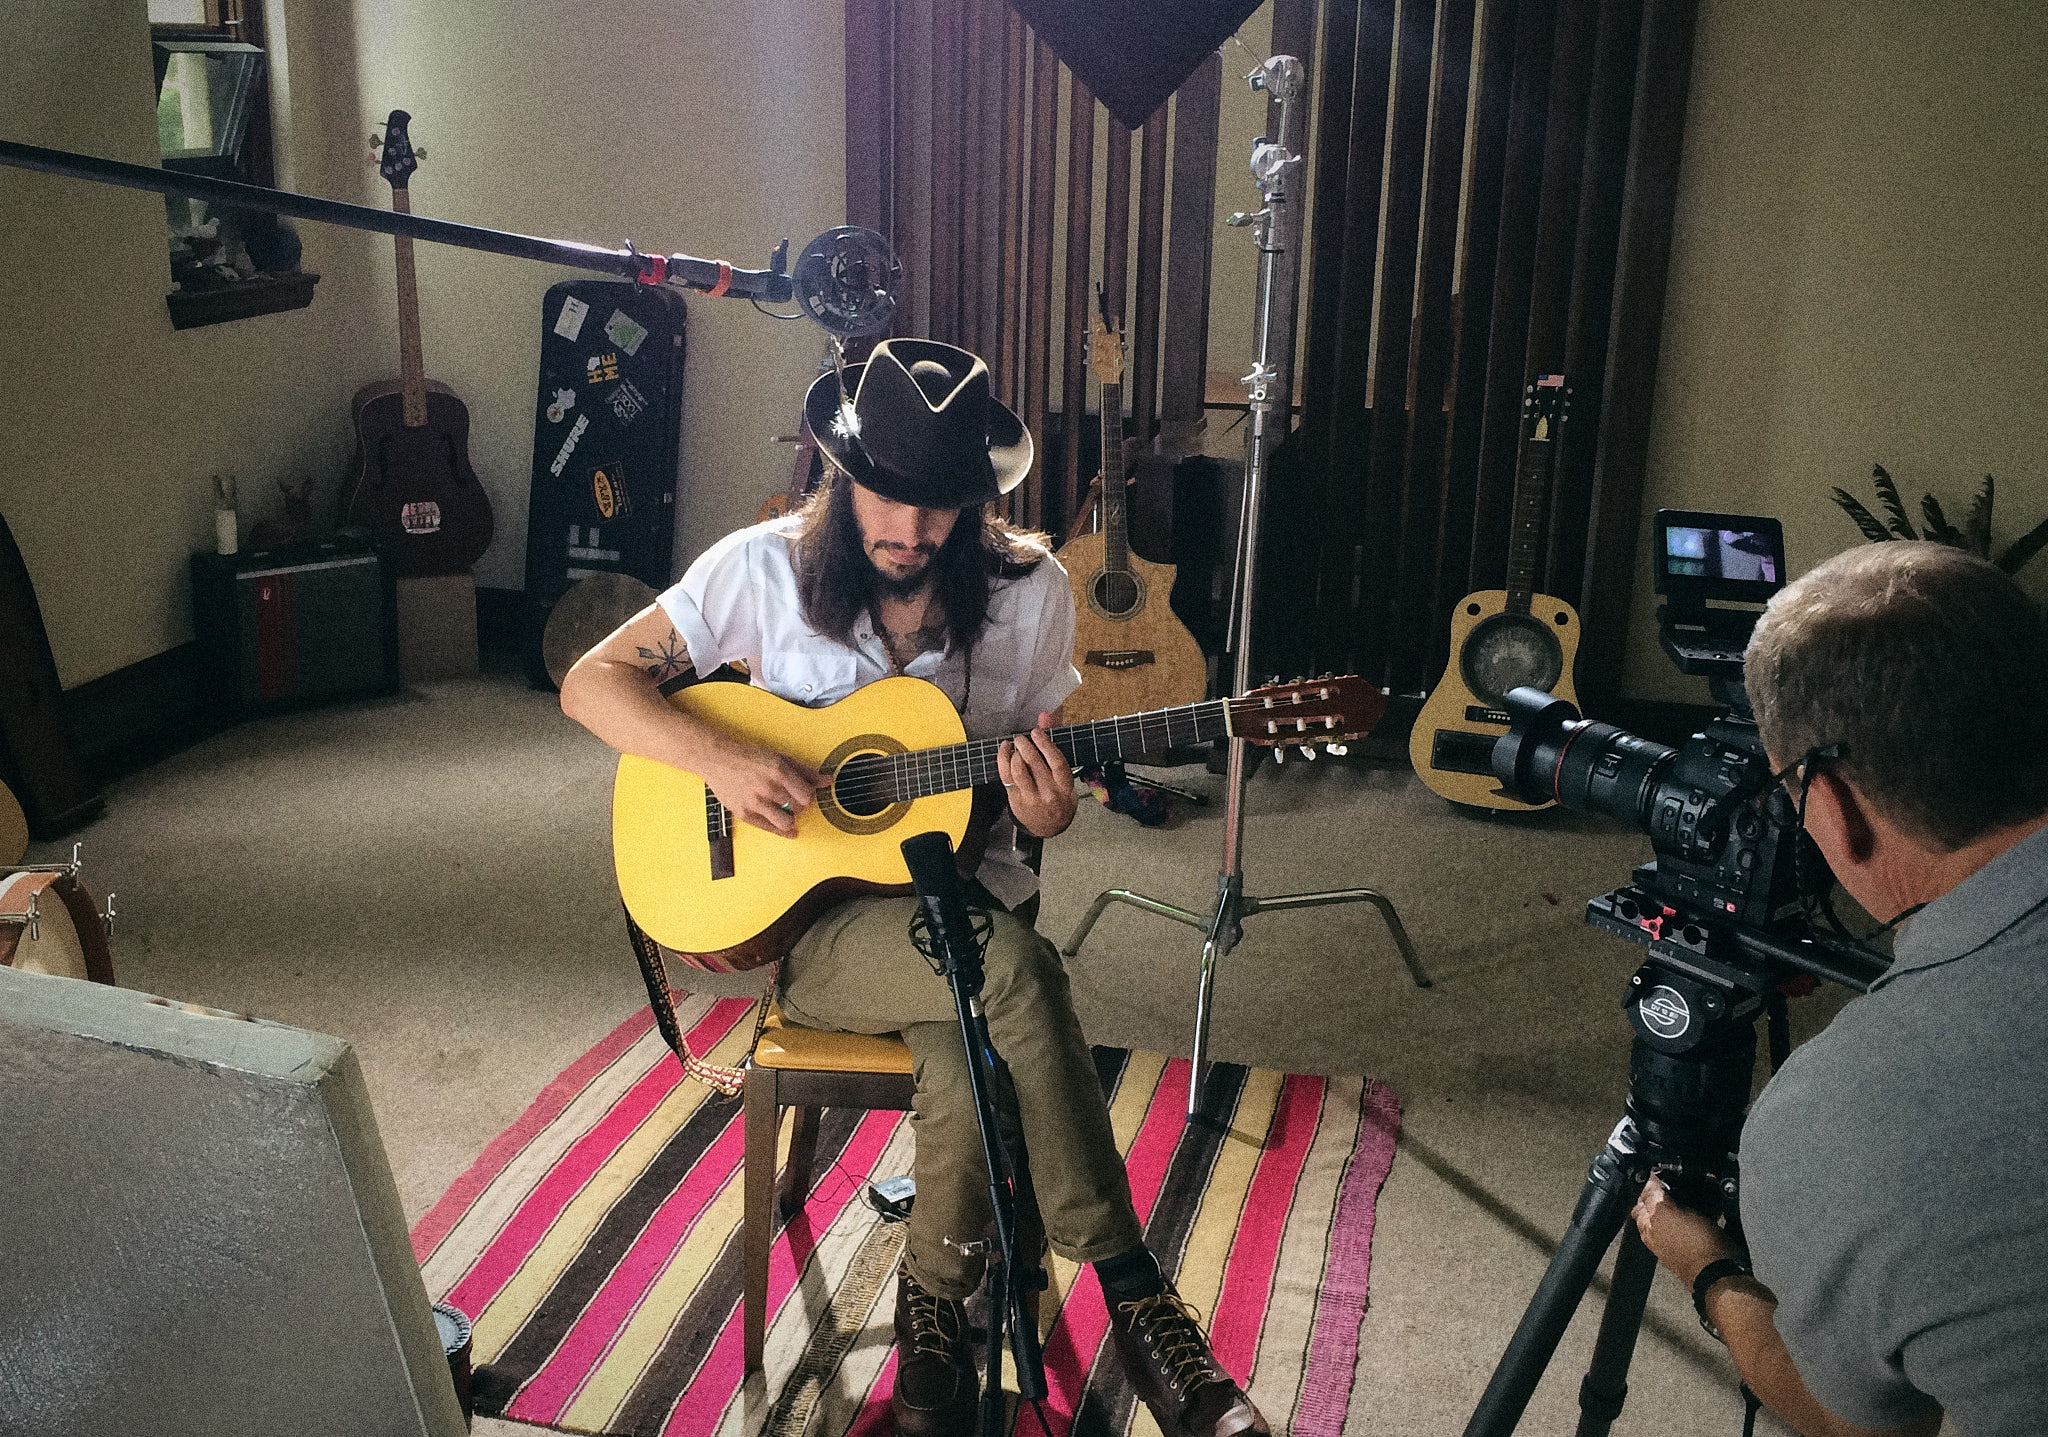 Live recording acoustic guitar singer studio